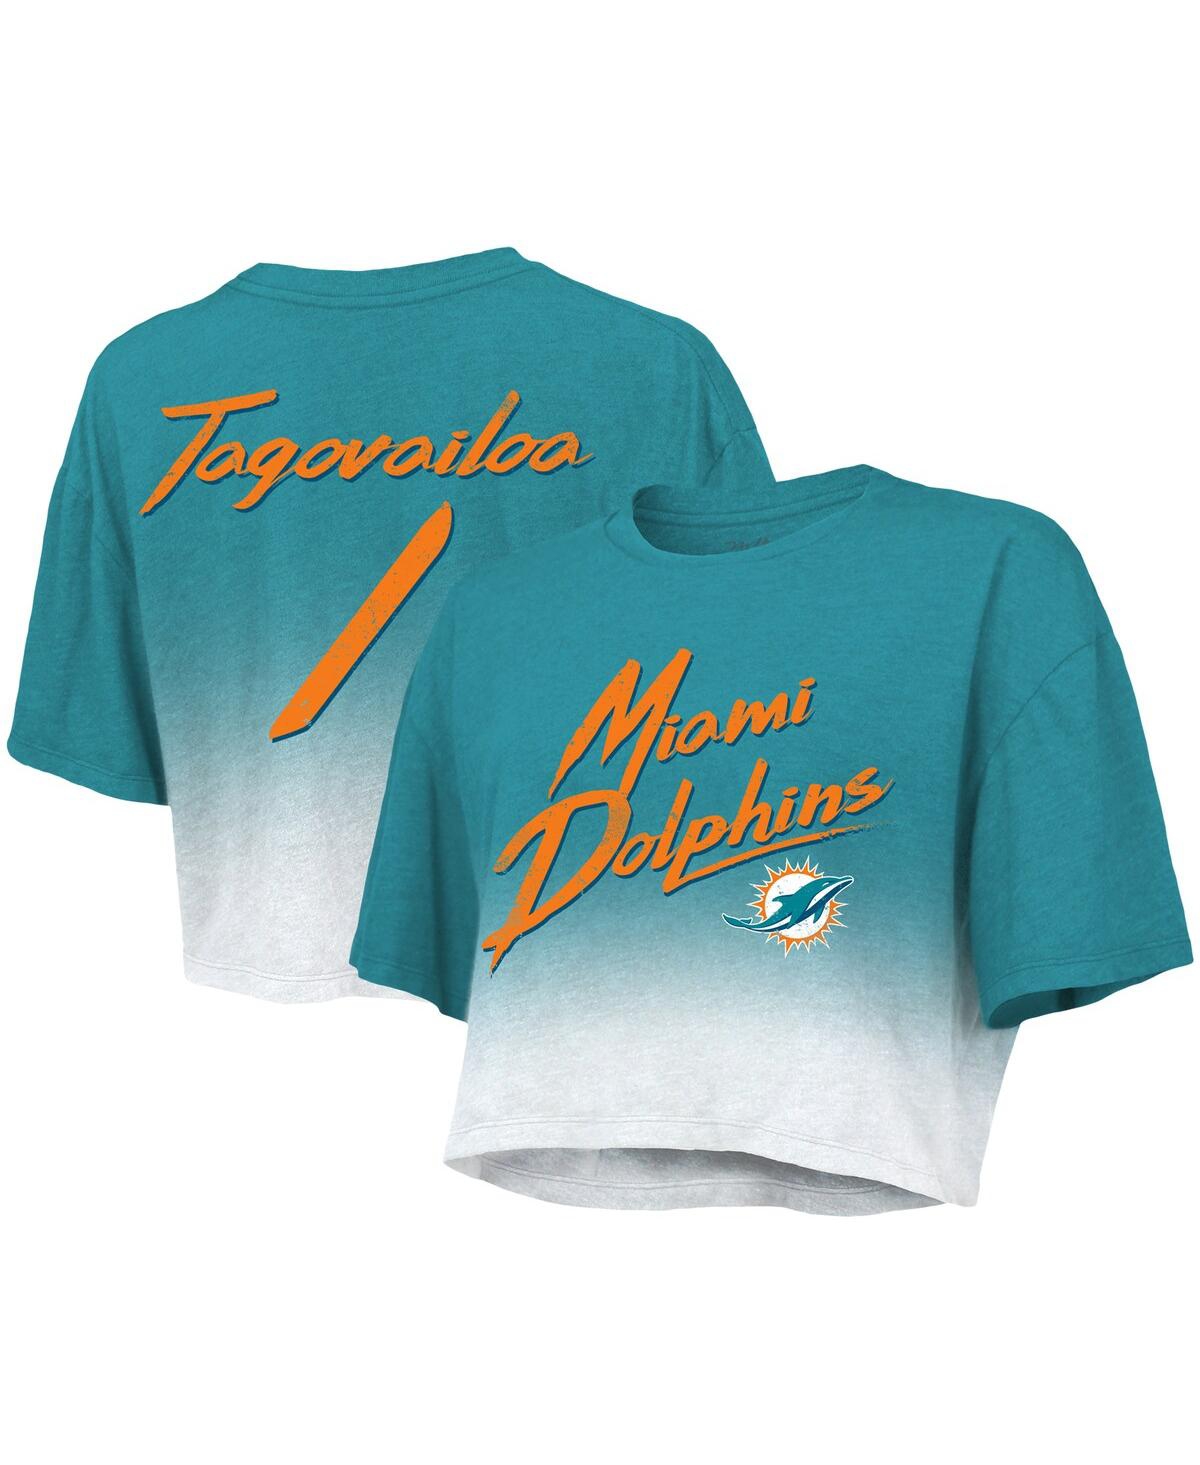 Women's Majestic Threads Tua Tagovailoa Aqua, White Miami Dolphins Drip-Dye Player Name and Number Tri-Blend Crop T-shirt - Aqua, White